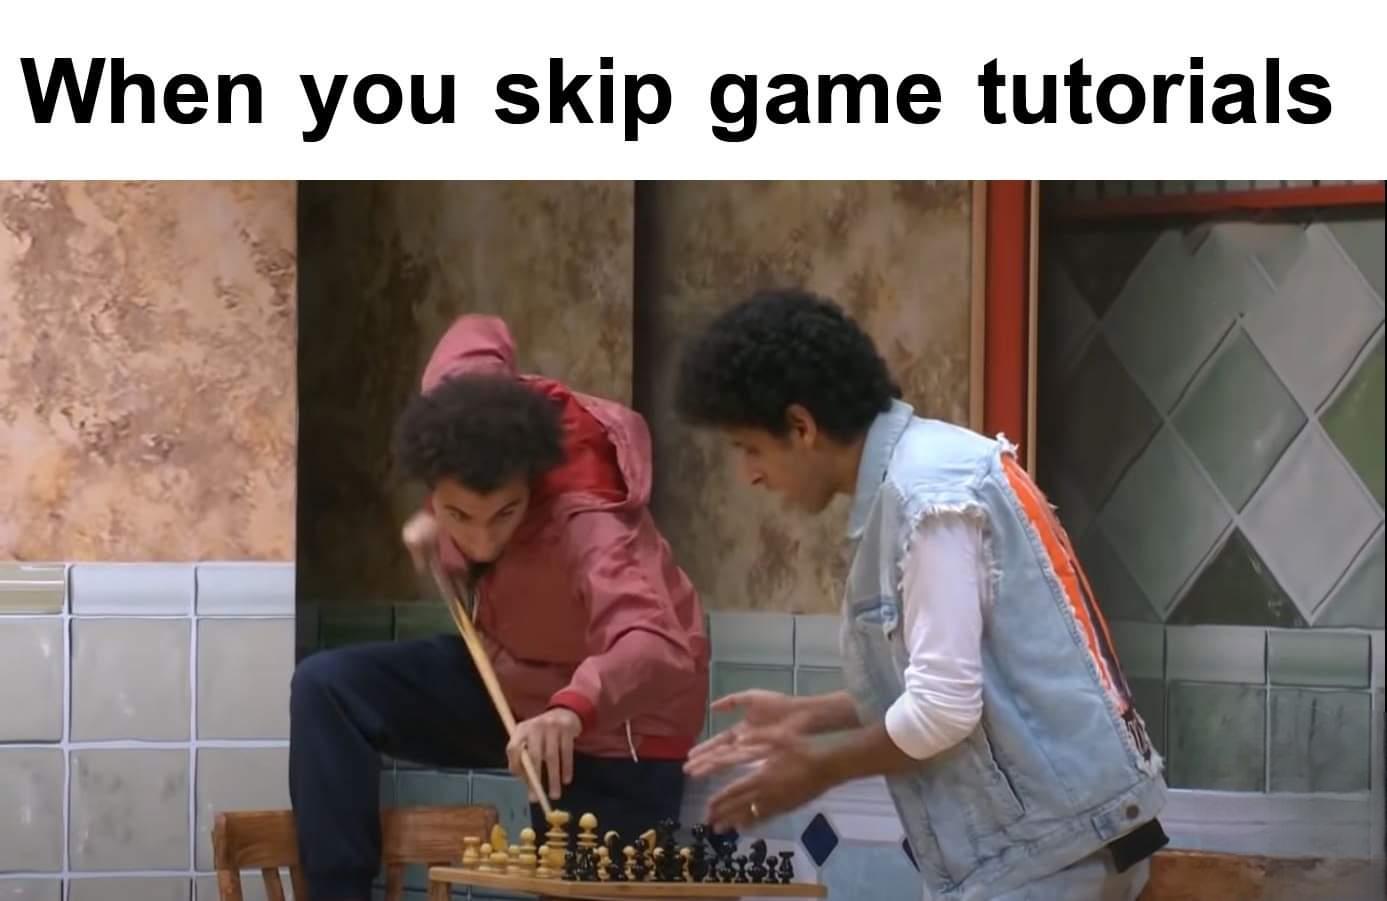 dank memes - you skip game tutorial - When you skip game tutorials